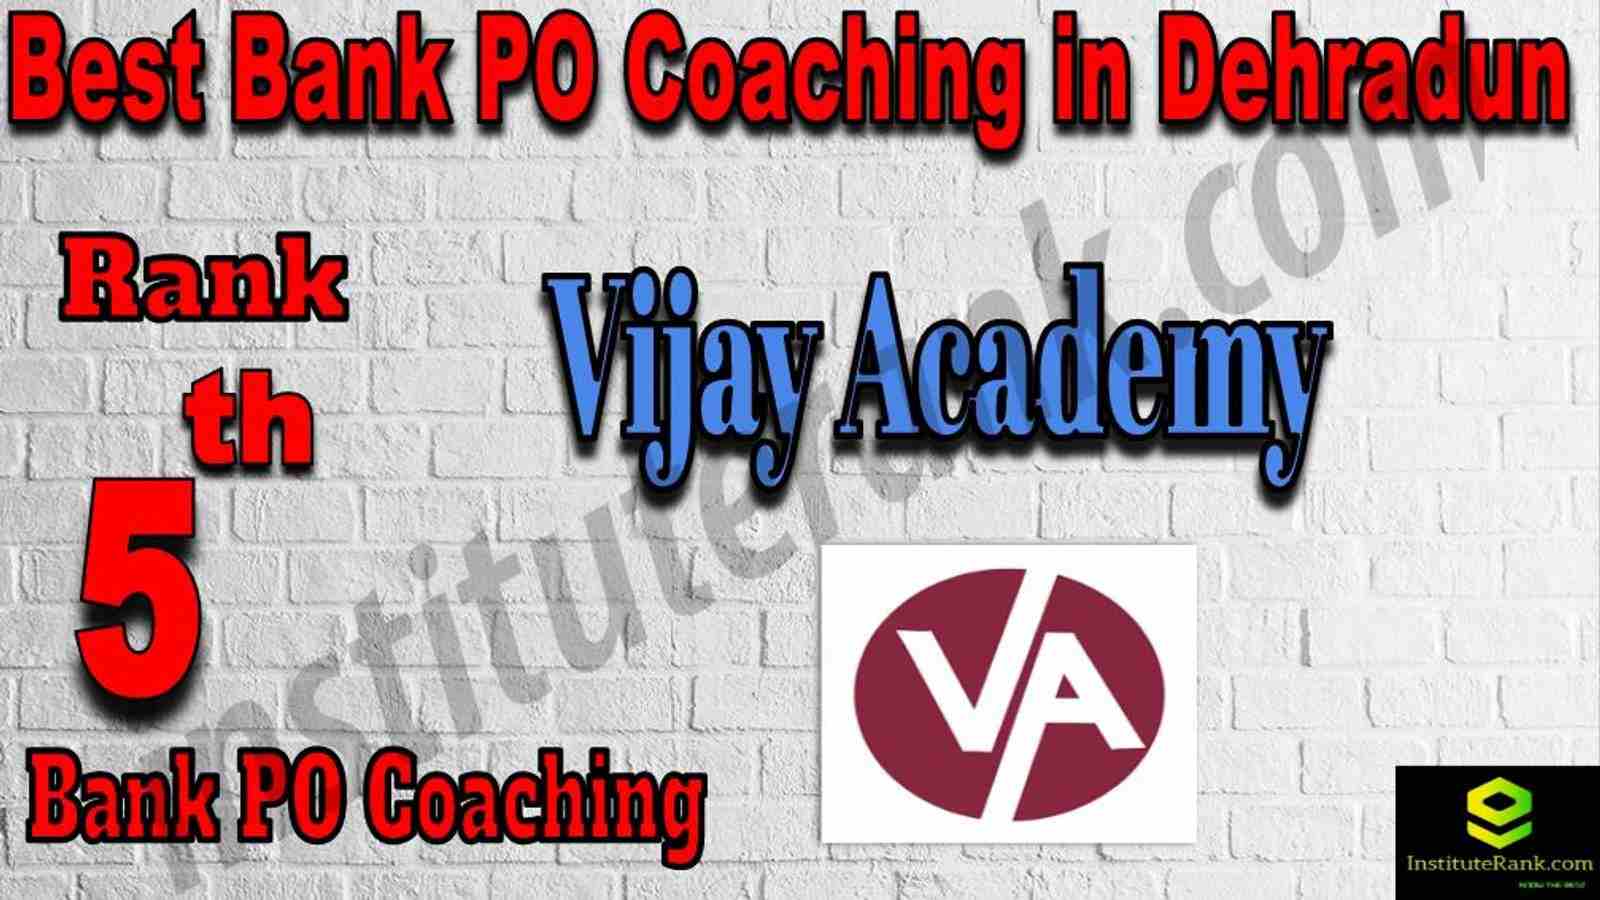 5th Best Bank PO Coaching in Dehradun